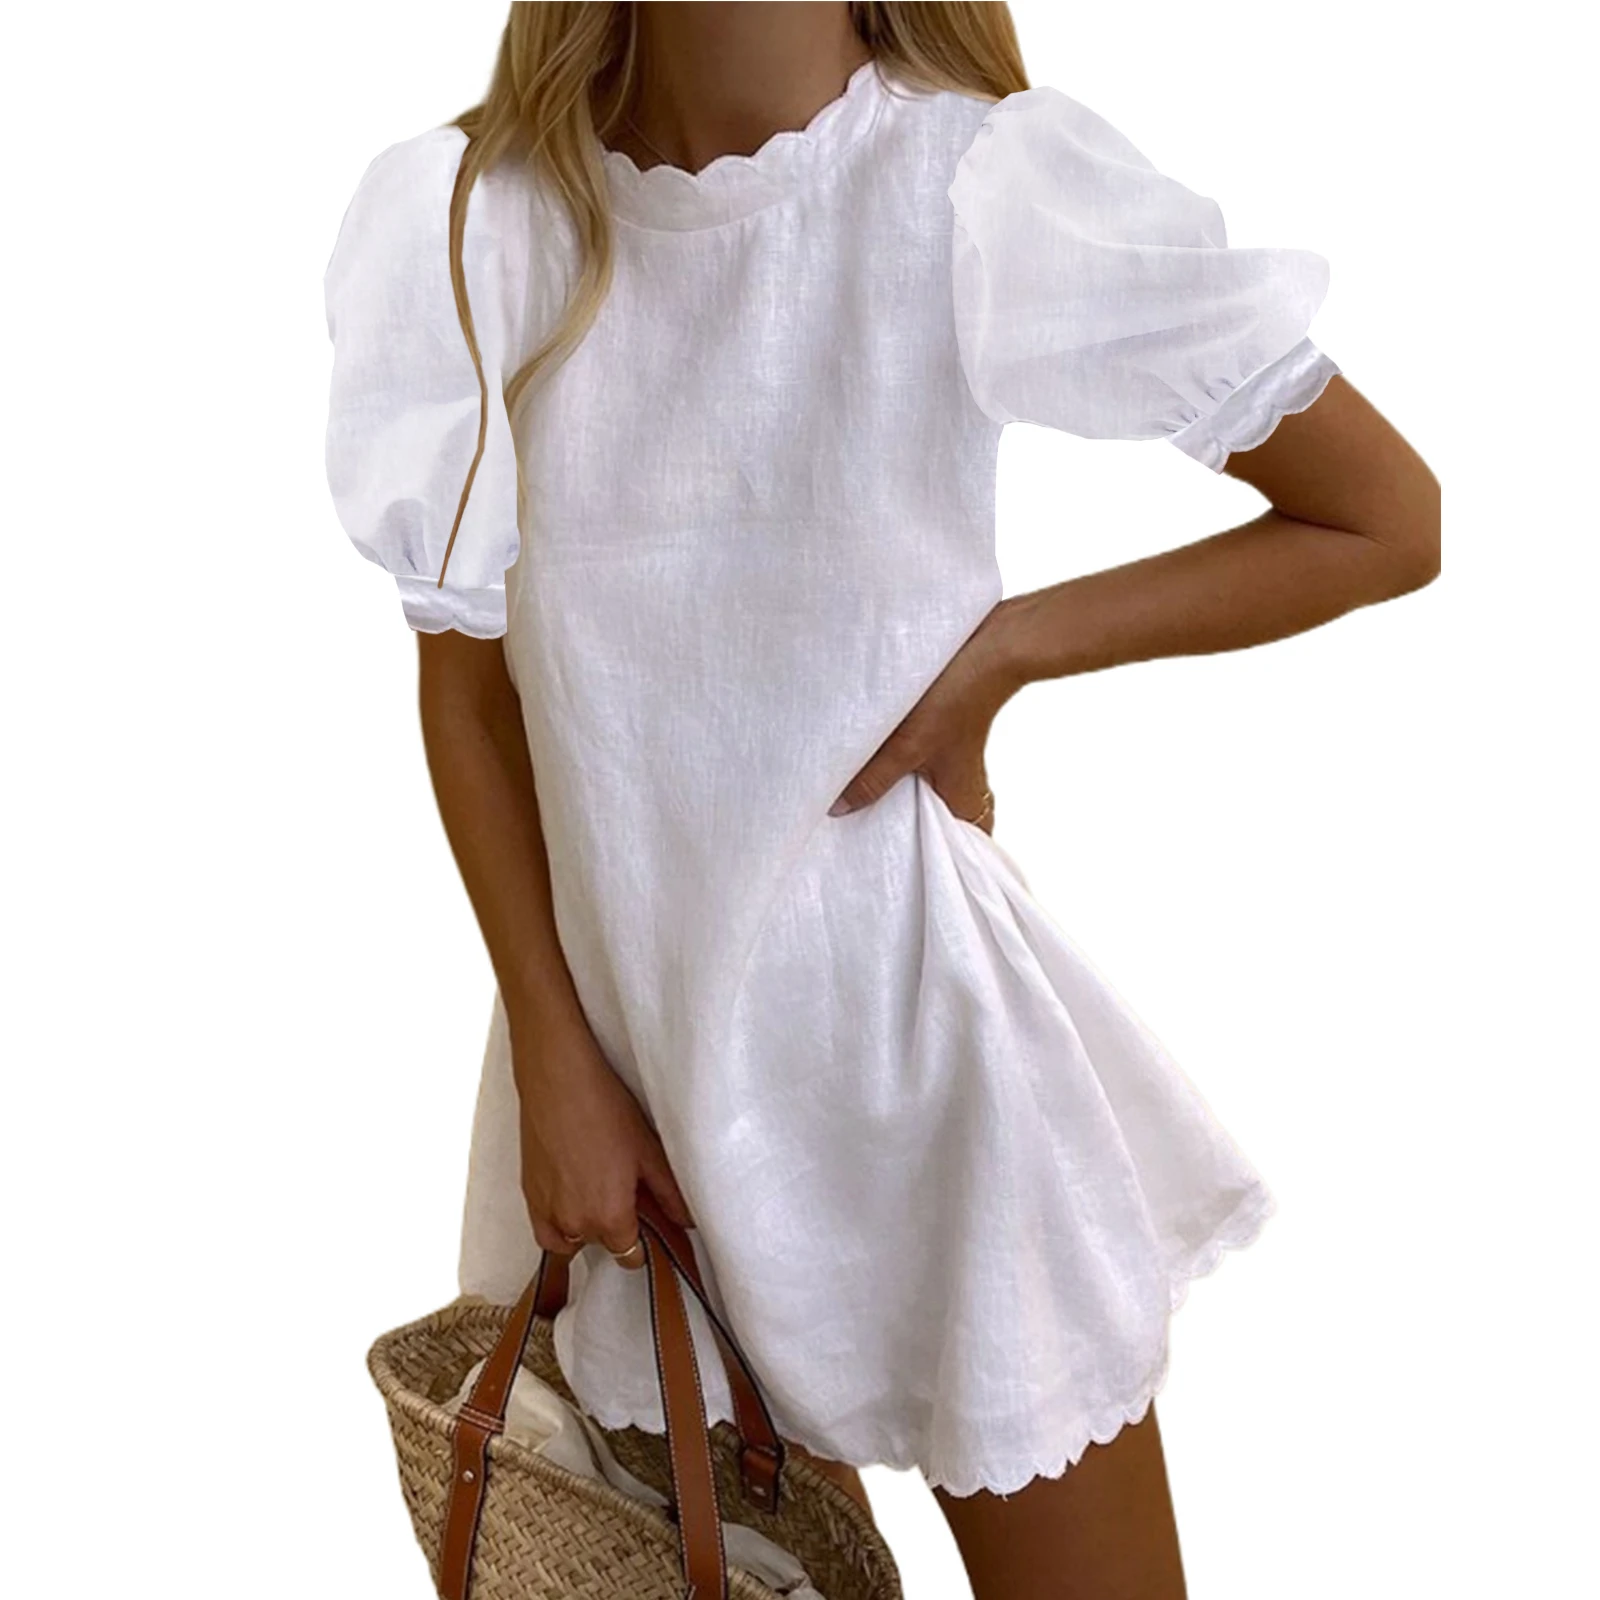 

Women's Solid Color High Neck Beachwear Dress Ruffles Short Puff Sleeve Fashion Summer Casual A-Line Mini Sundress